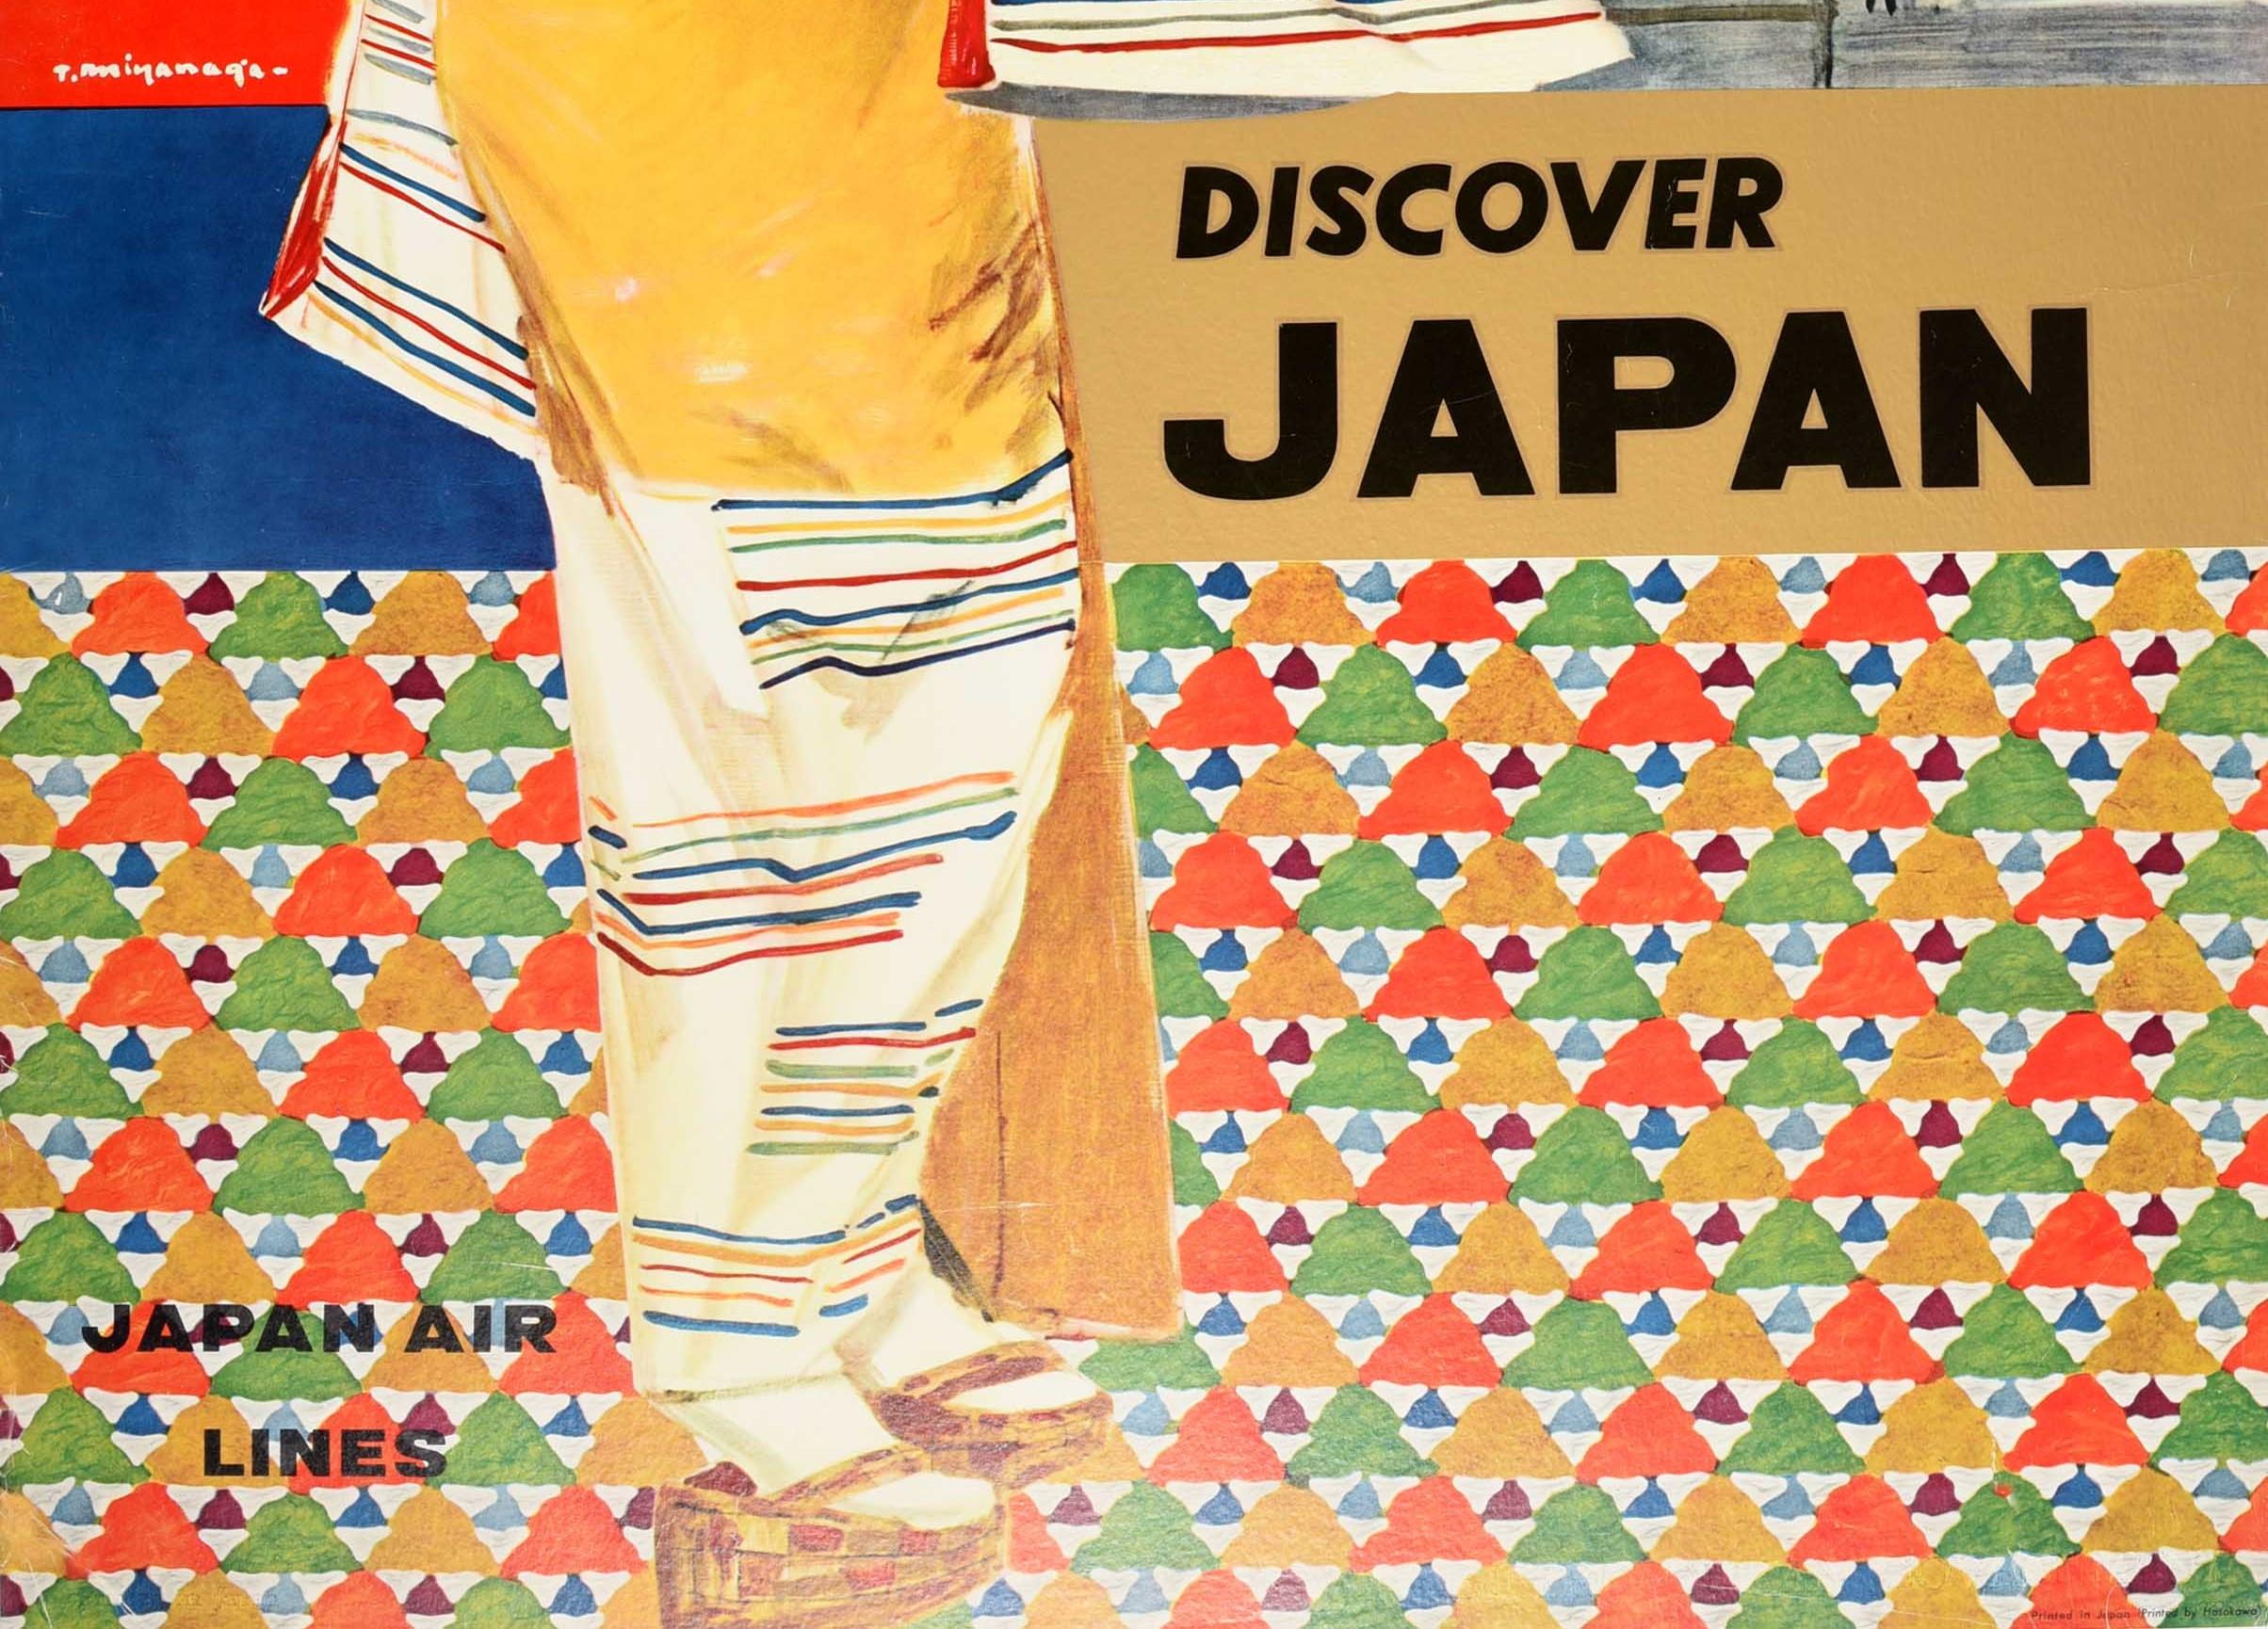 Japanese Original Vintage Travel Poster Discover Japan Air Lines JAL City View Kimono Art For Sale